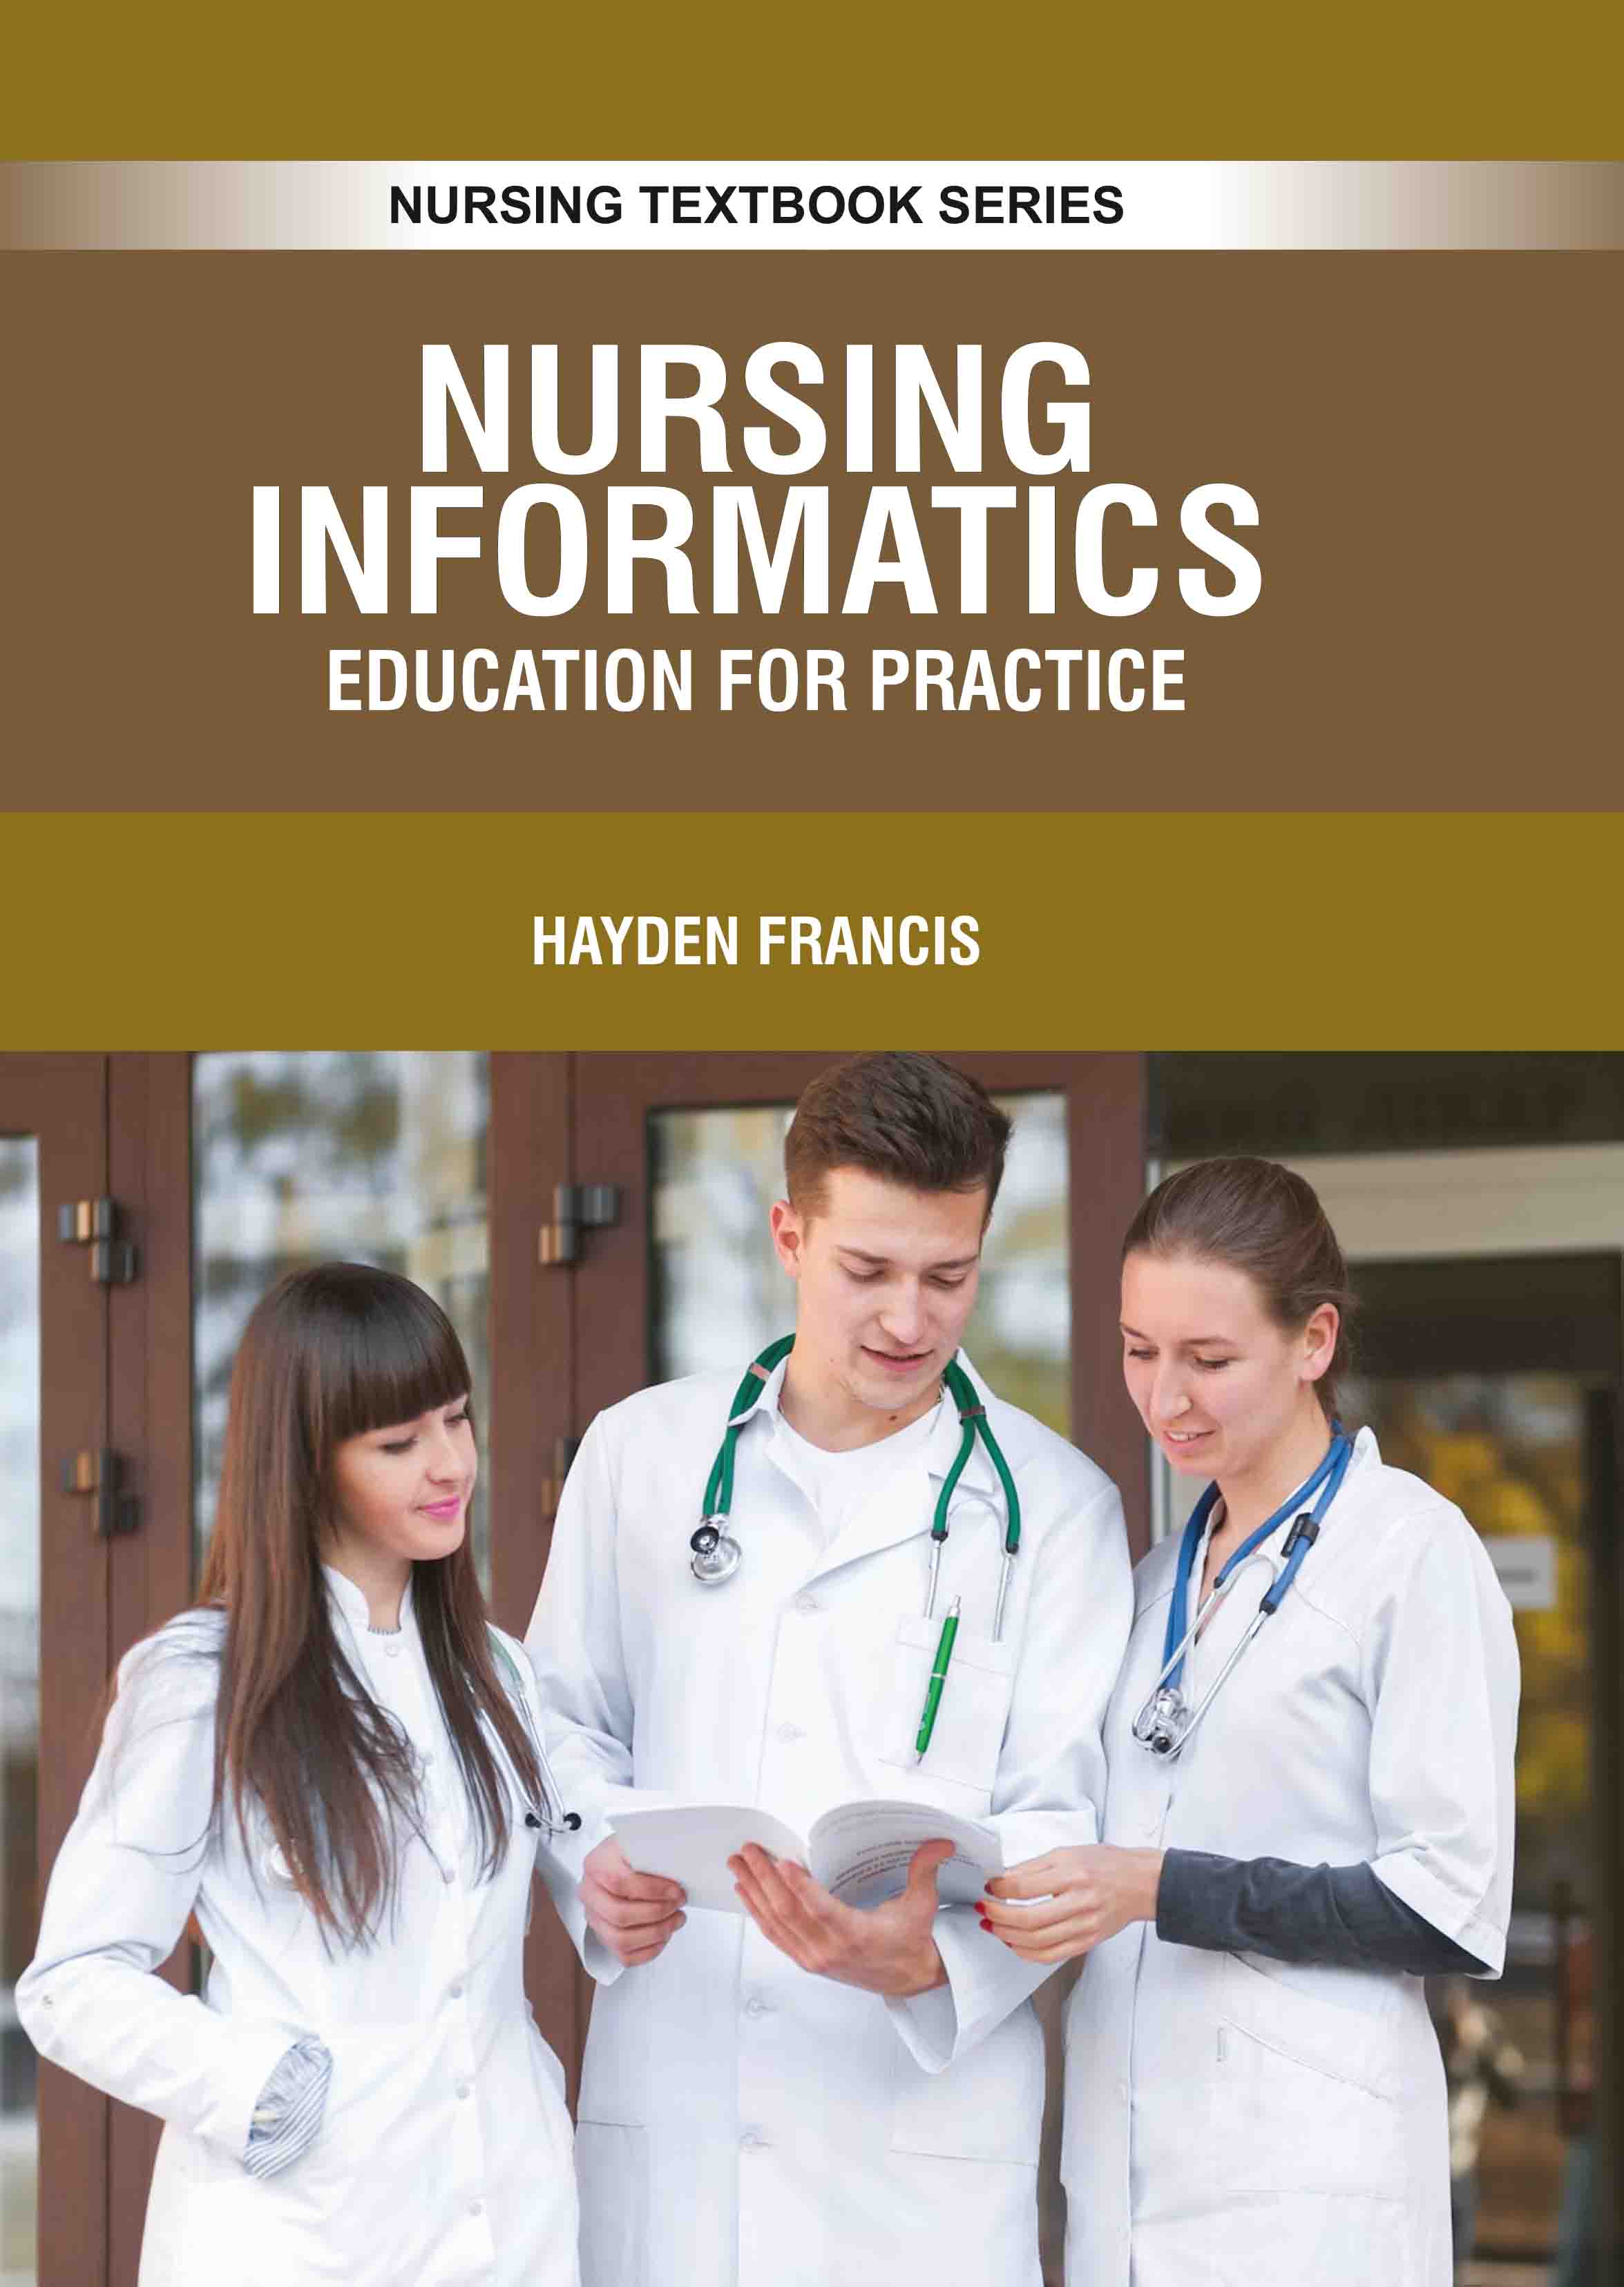 Nursing informatics: Education for practice